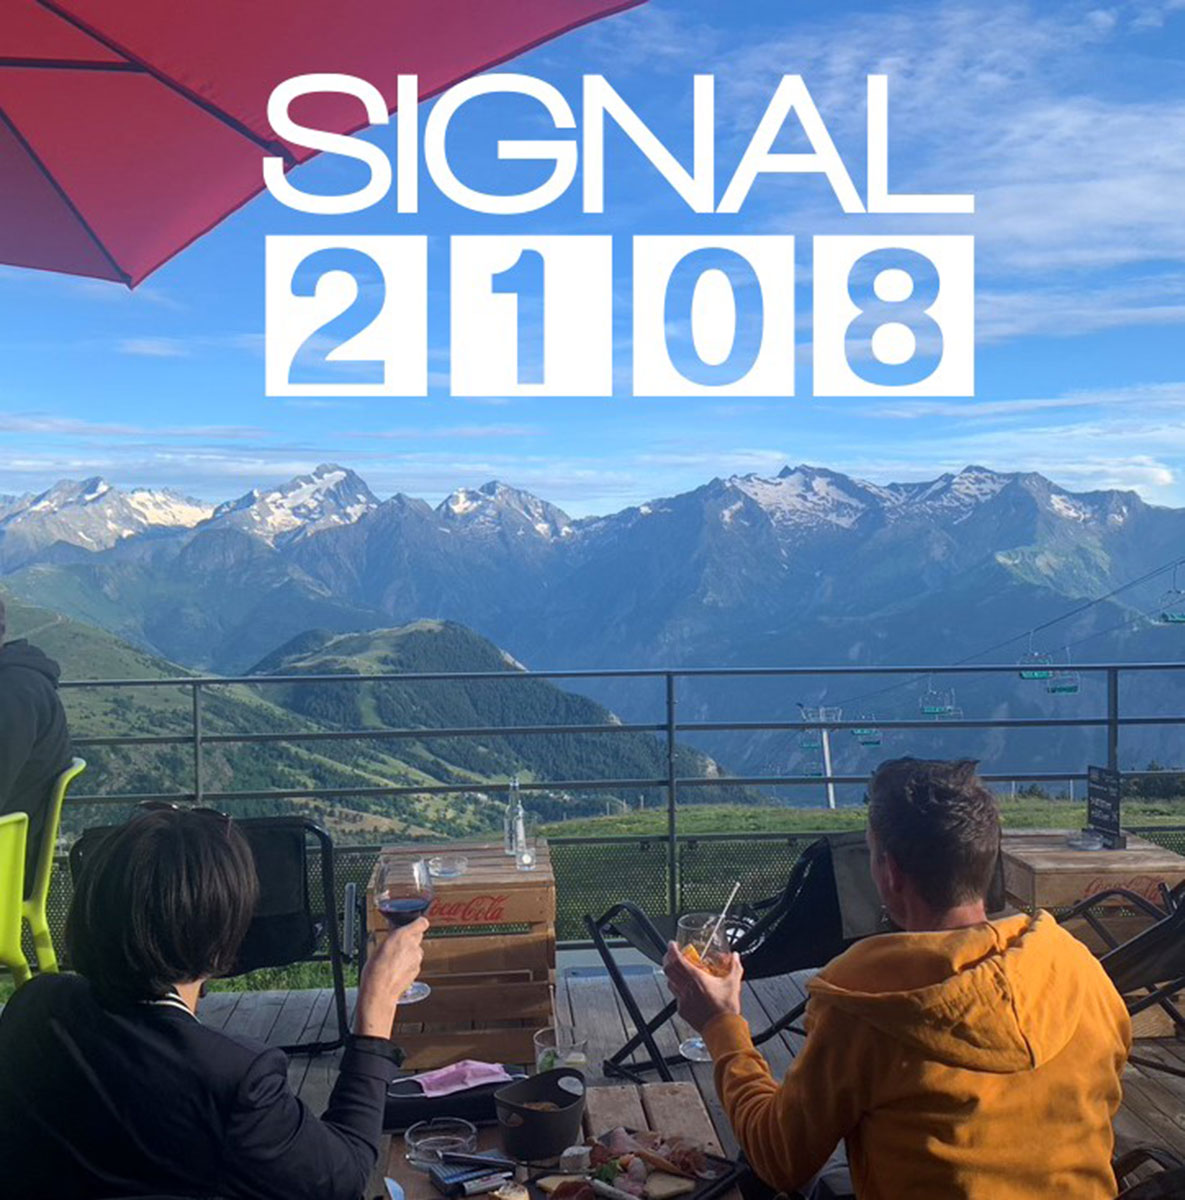 Signal 2108